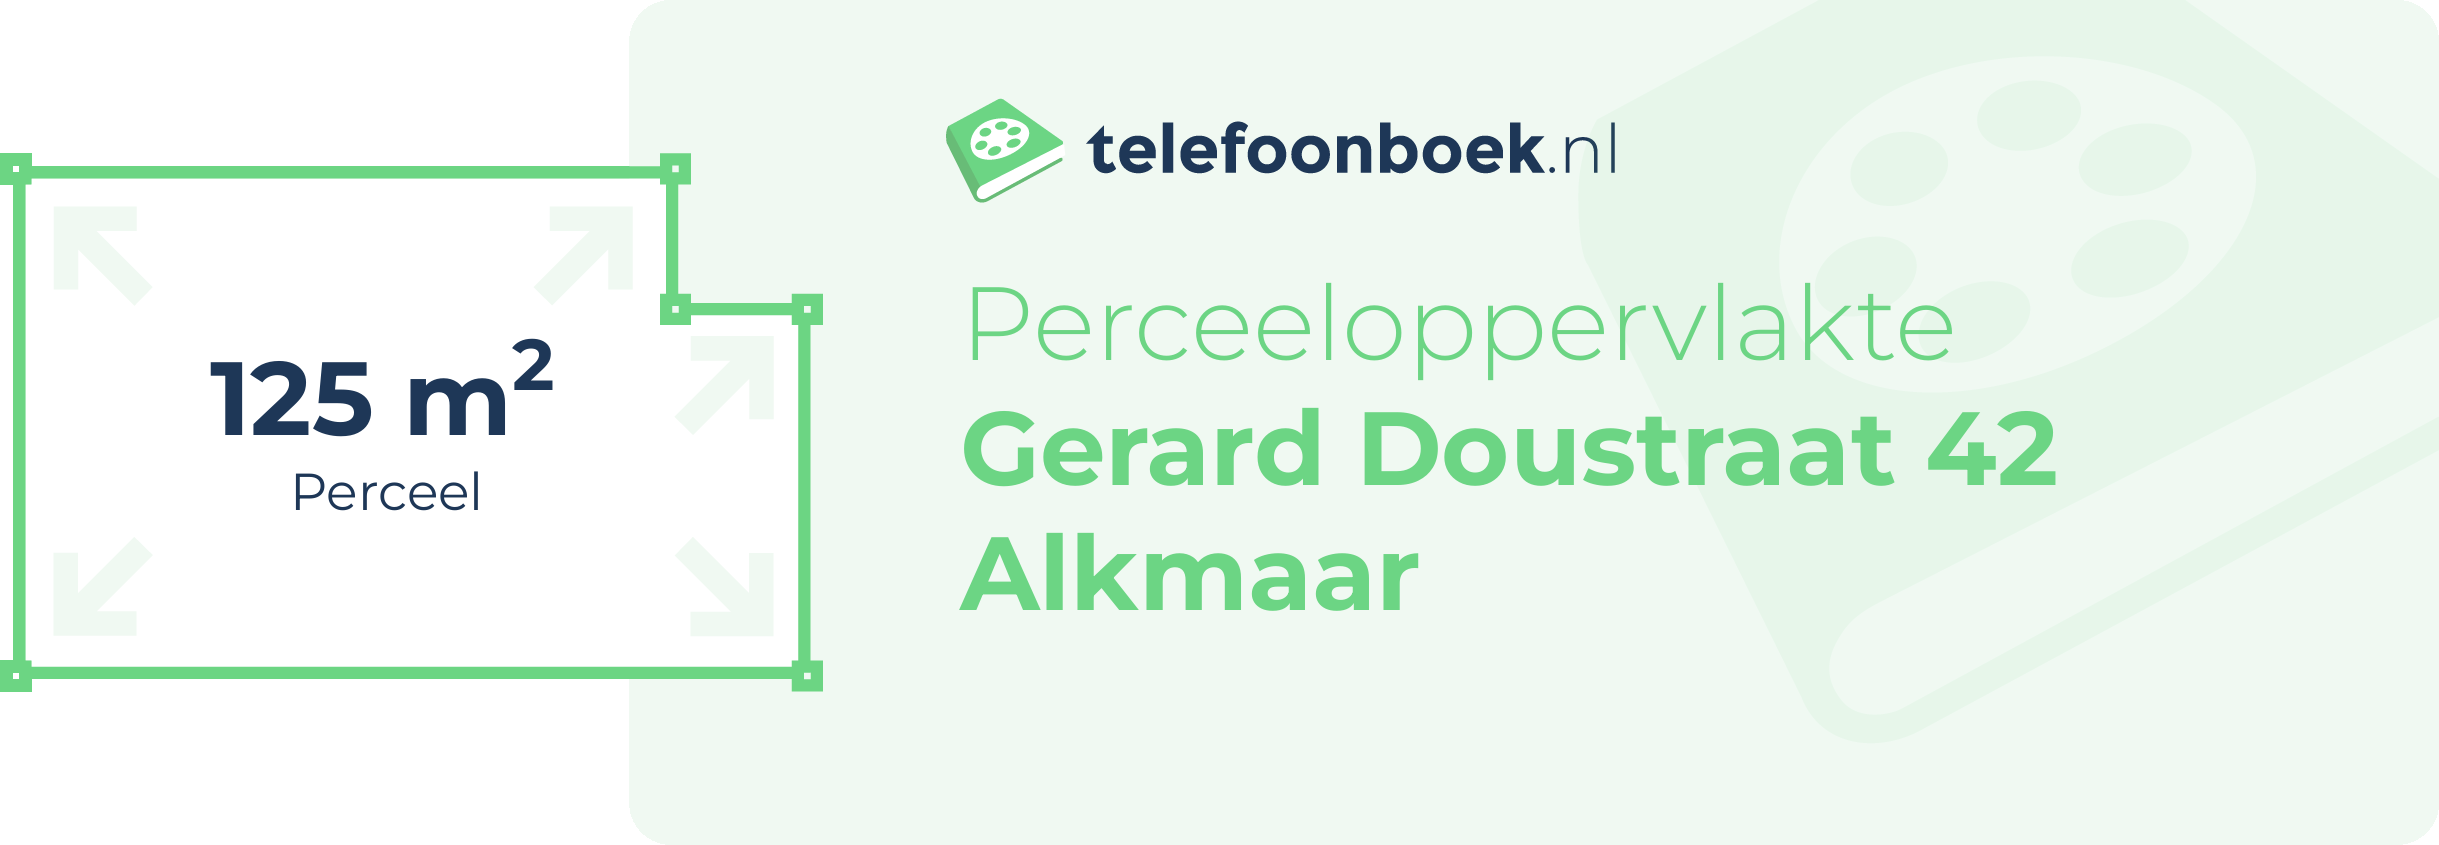 Perceeloppervlakte Gerard Doustraat 42 Alkmaar